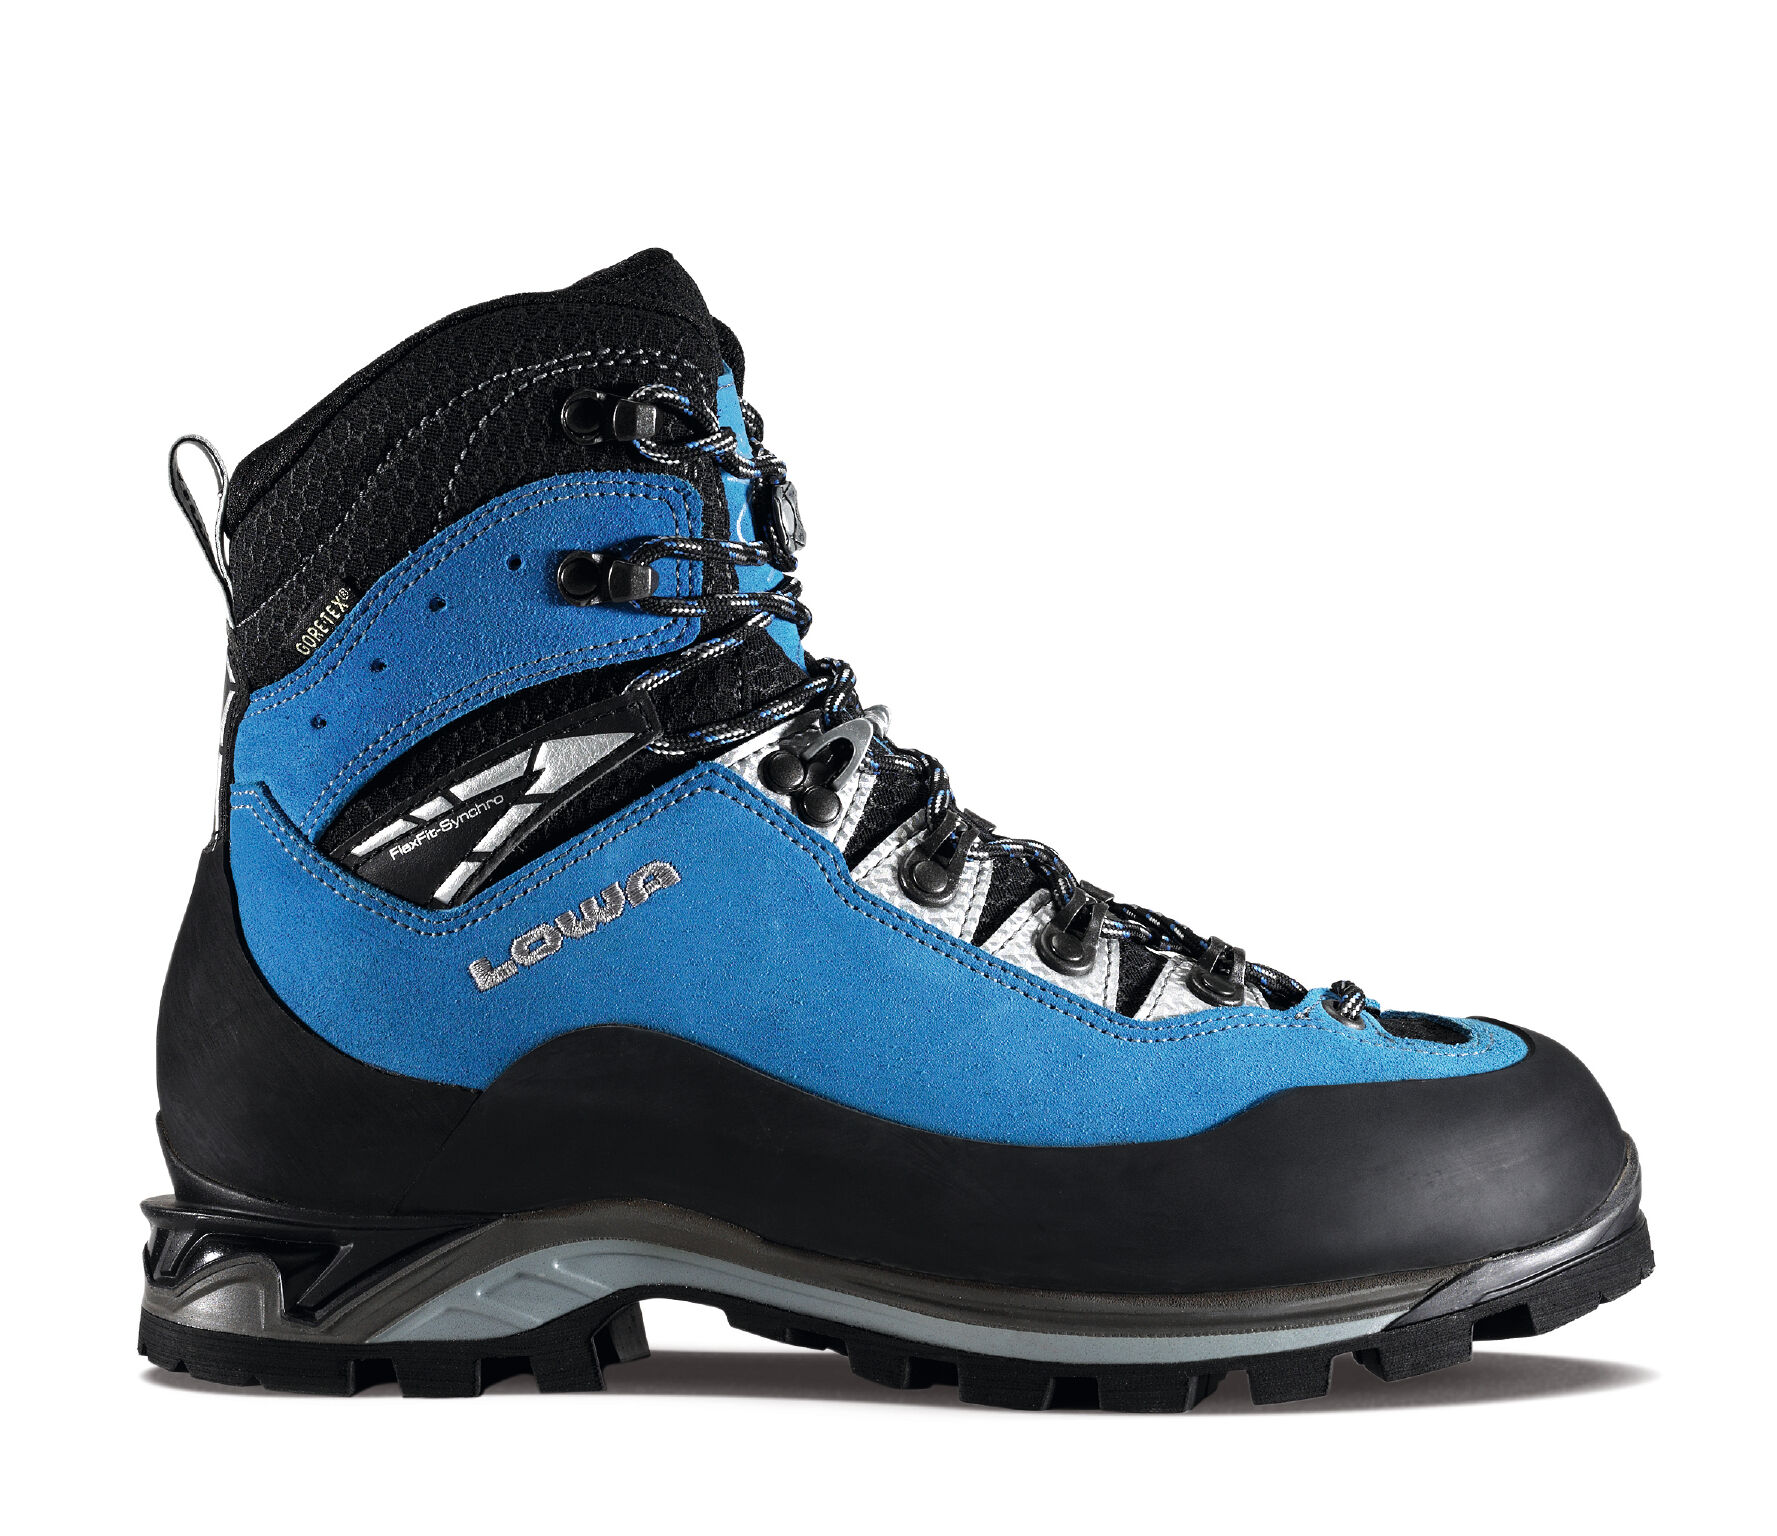 Lowa - Cevedale Pro GTX® - Hiking Boots - Men's